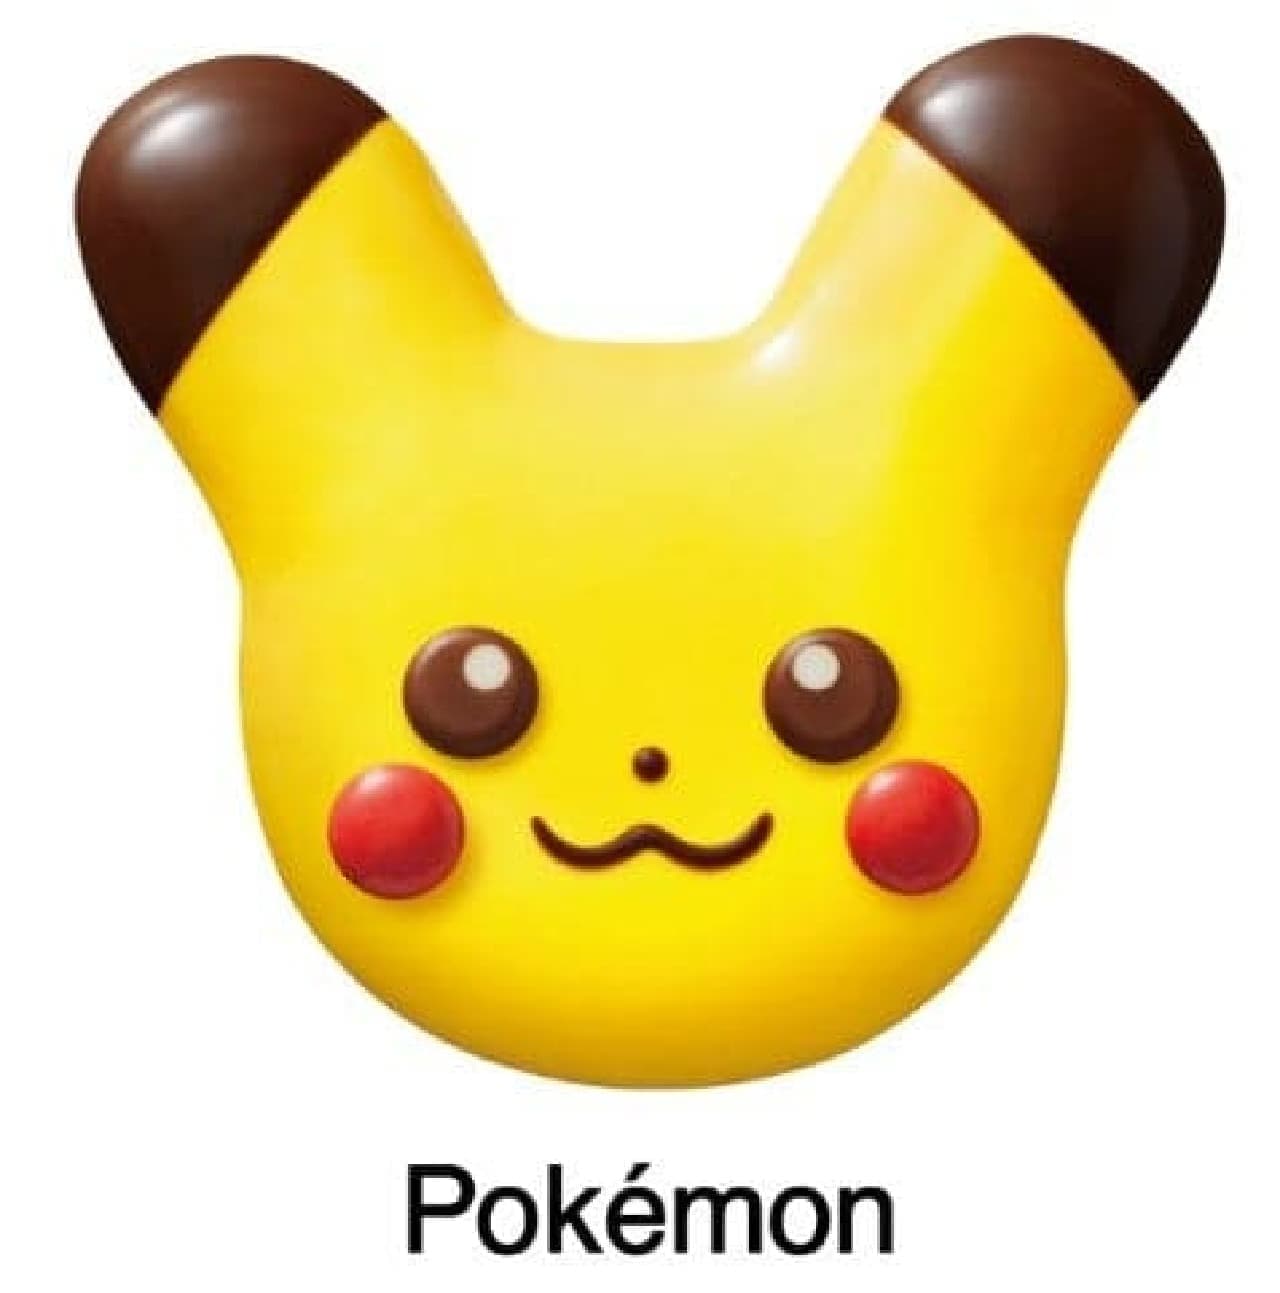 Missed "Pokemon Pikachu Donut".